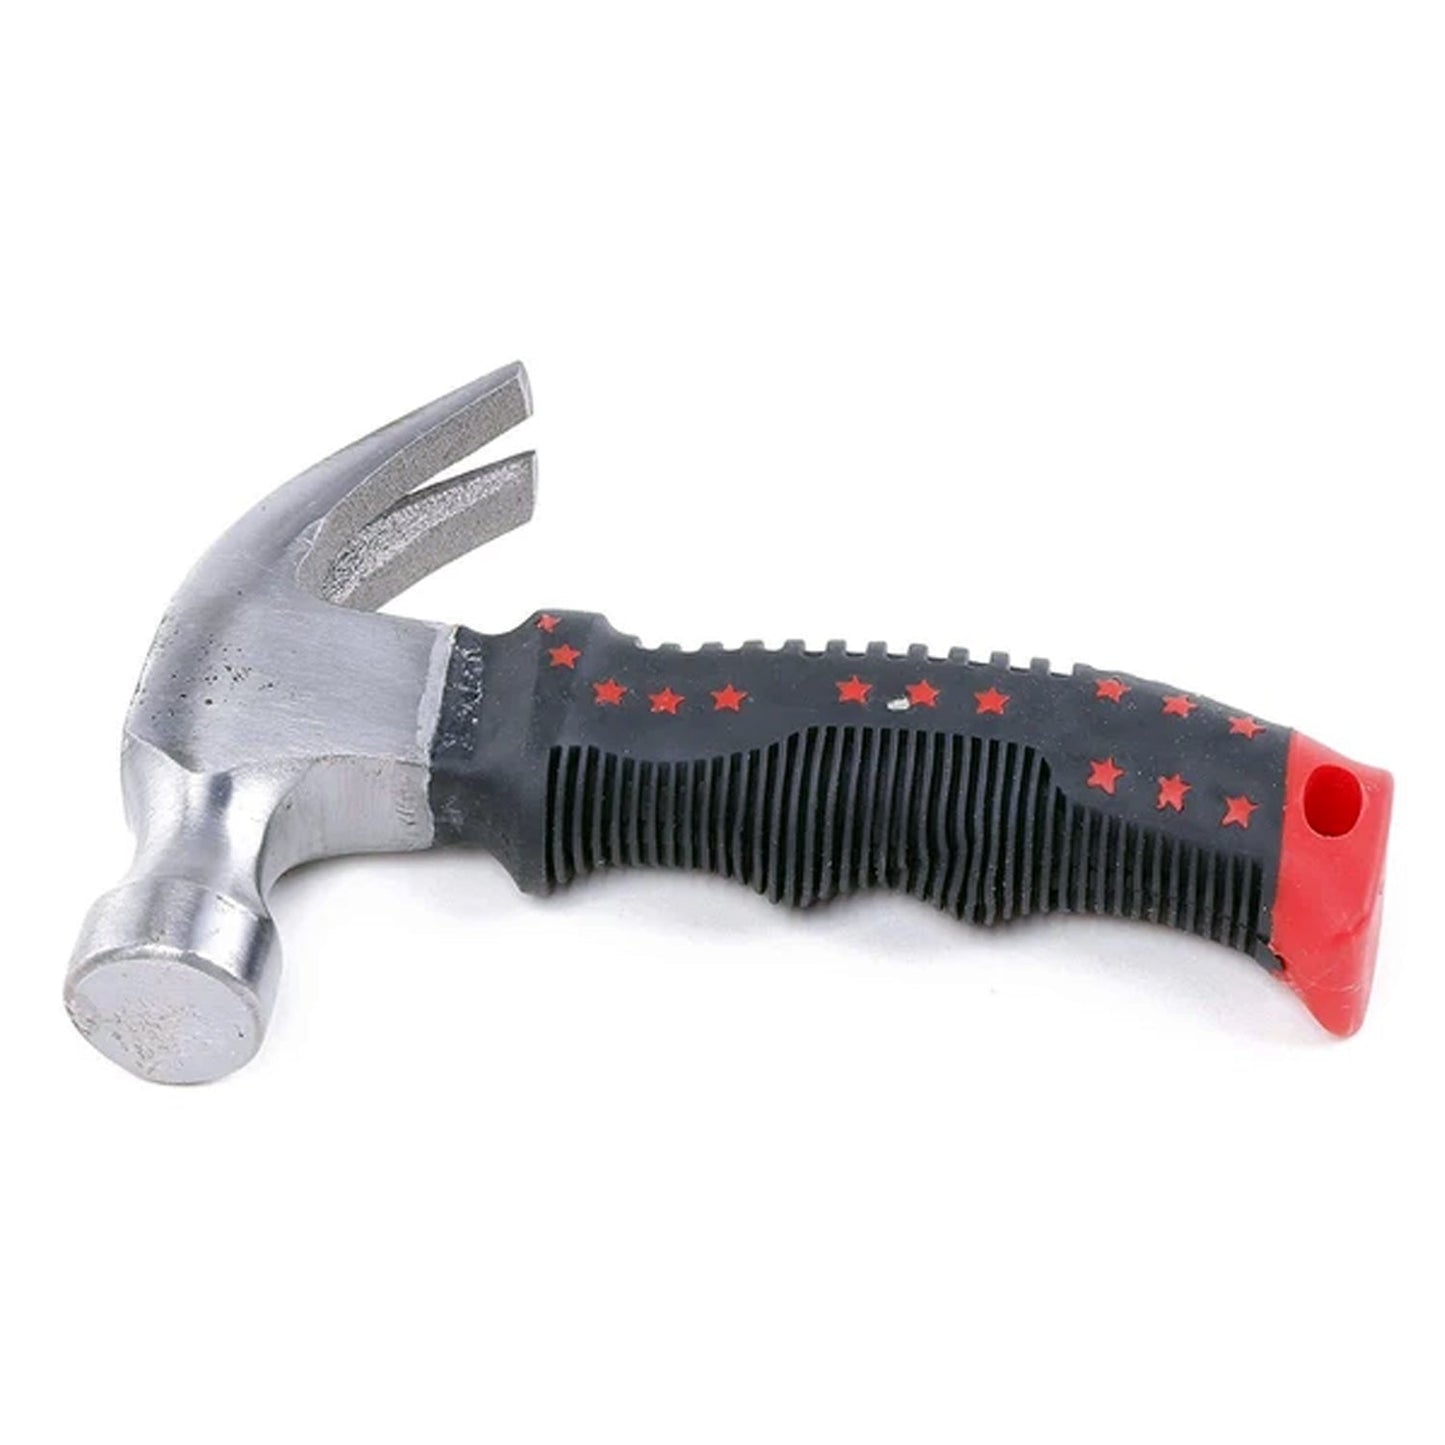 9079 Mini Claw Hammers Short Handle Plastic Grip (300 gram) DeoDap